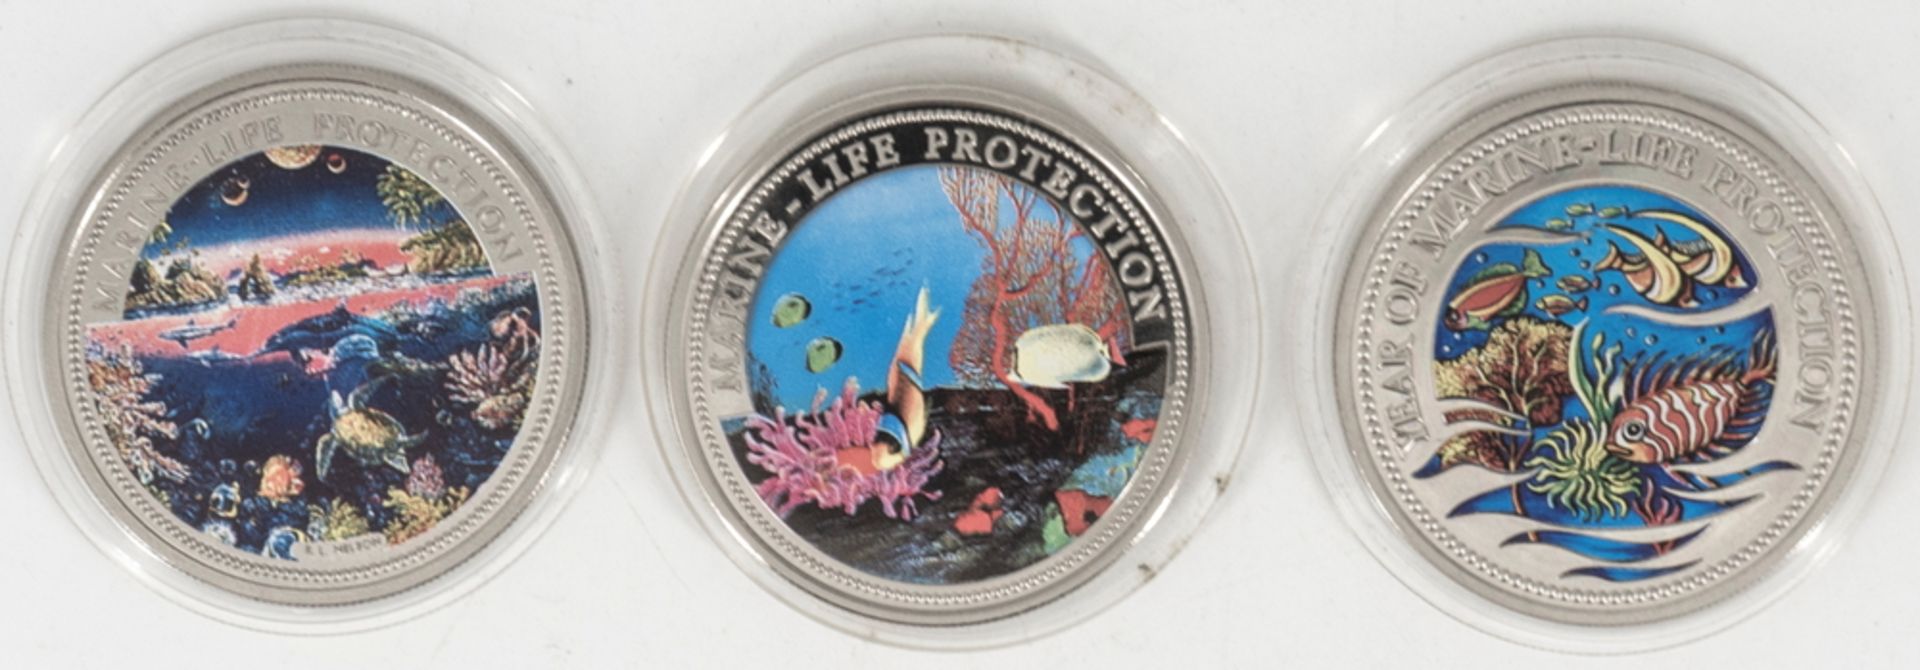 Palau 1992/94, drei 1 Dollar - Farbmünzen "Marine Live Protection". Erhaltung: PP